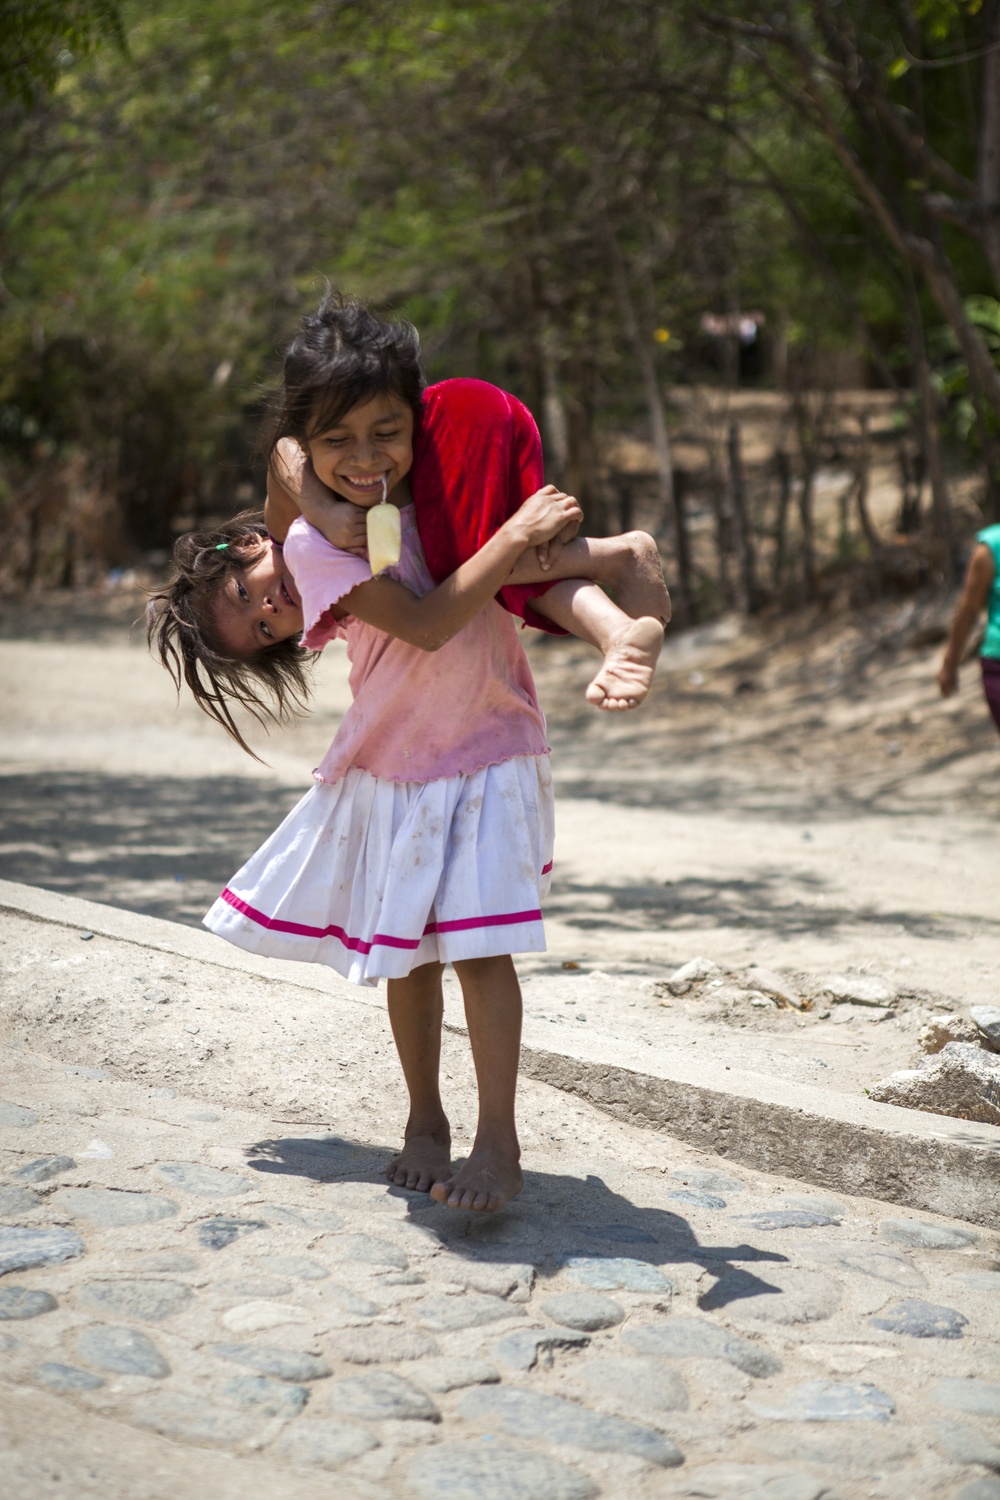 Beyond The Horizon 2014: Guatemala